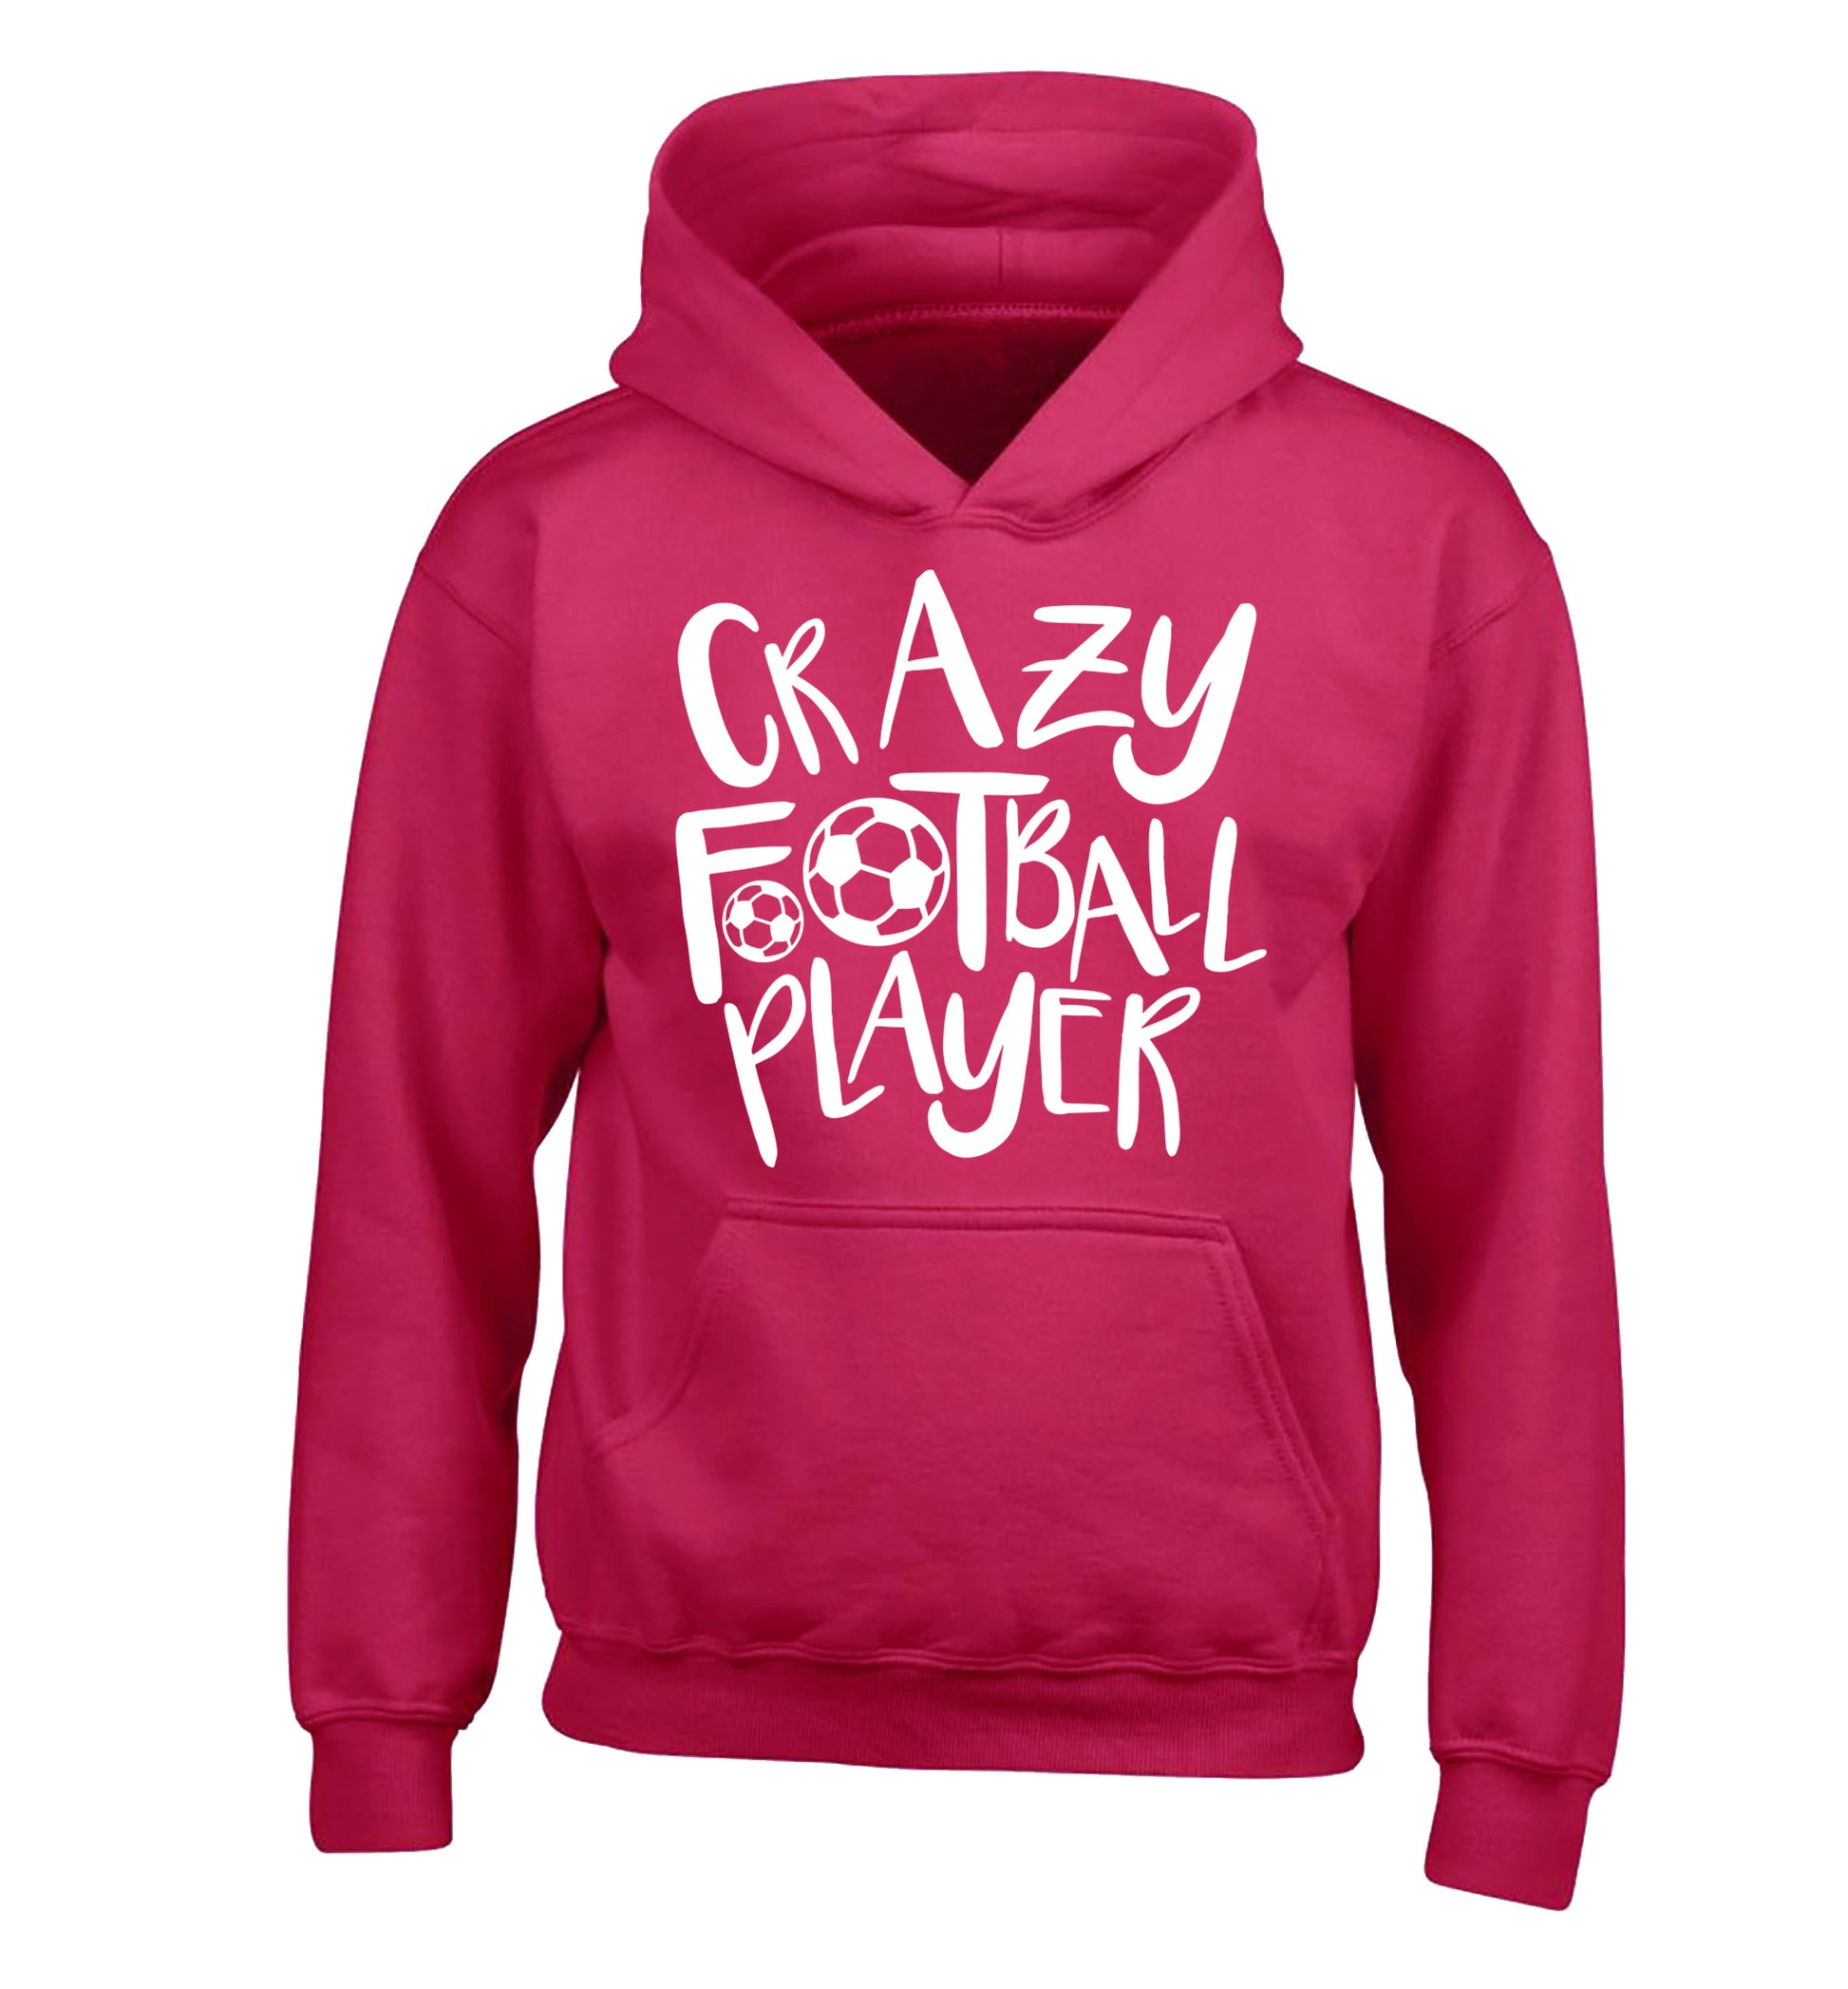 Crazy football player children's pink hoodie 12-14 Years